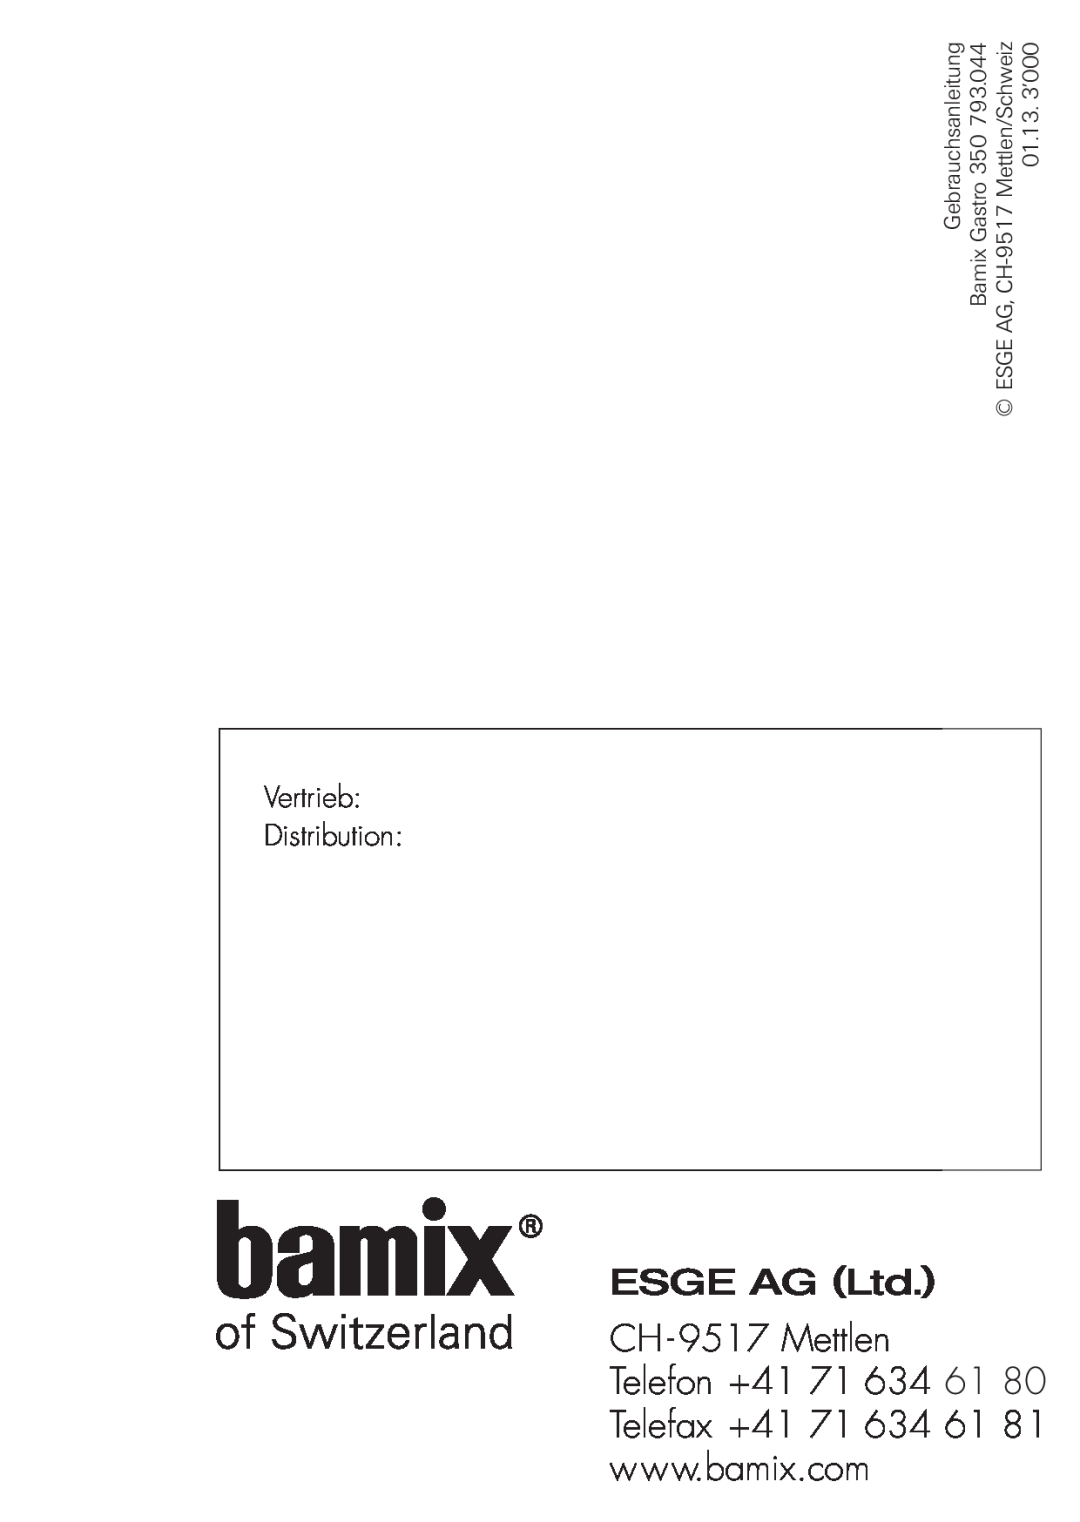 Bamix 106.031 manual CH - 9517 Mettlen Telefon +41, Vertrieb Distribution, 01.13. 3’000, Esge 